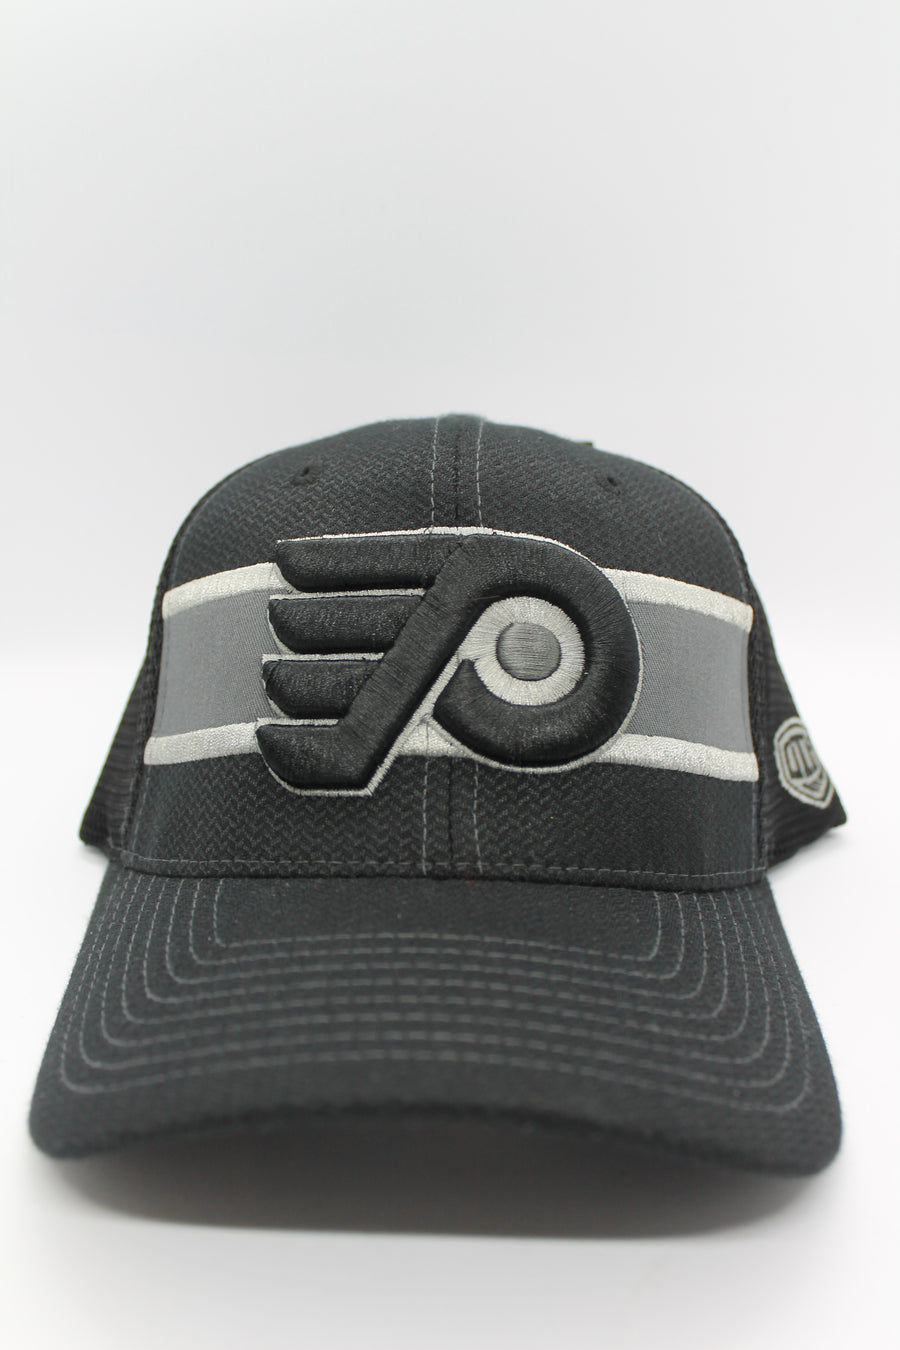 NHL Philadelphia Flyers Flex Fit Hat